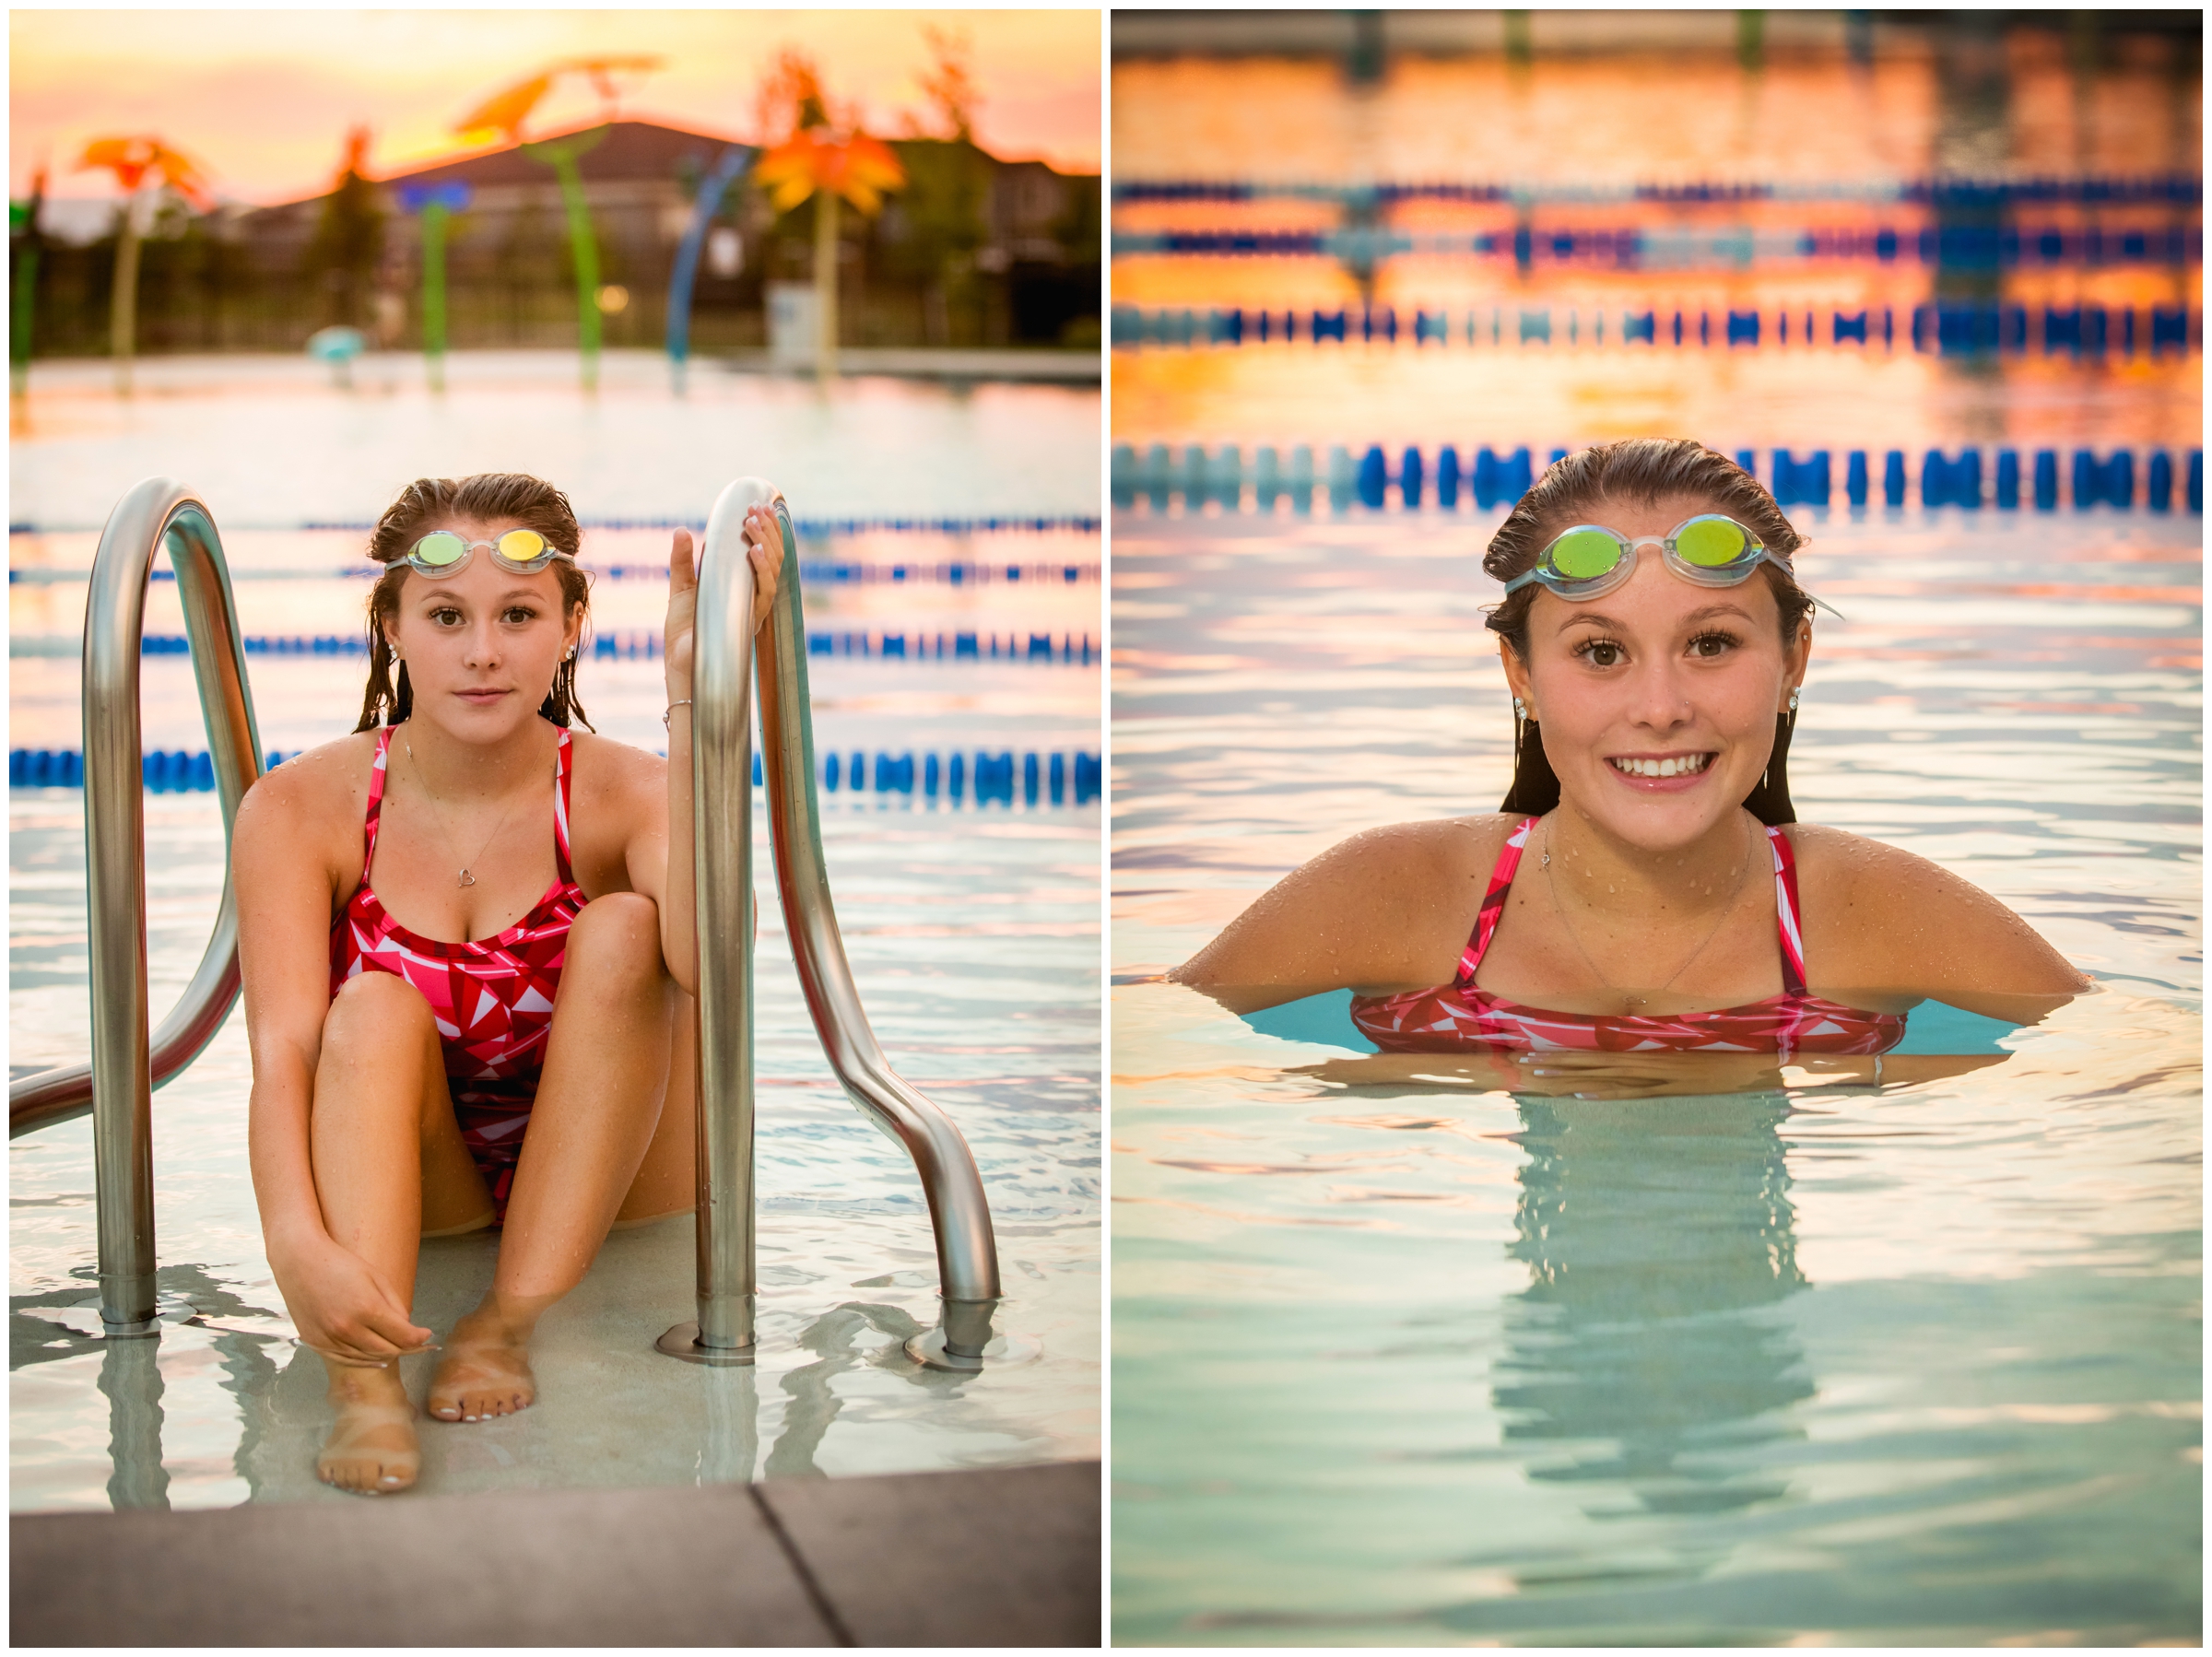 swimming senior photos inspiration by Mead Colorado photographer Plum Pretty Photography 